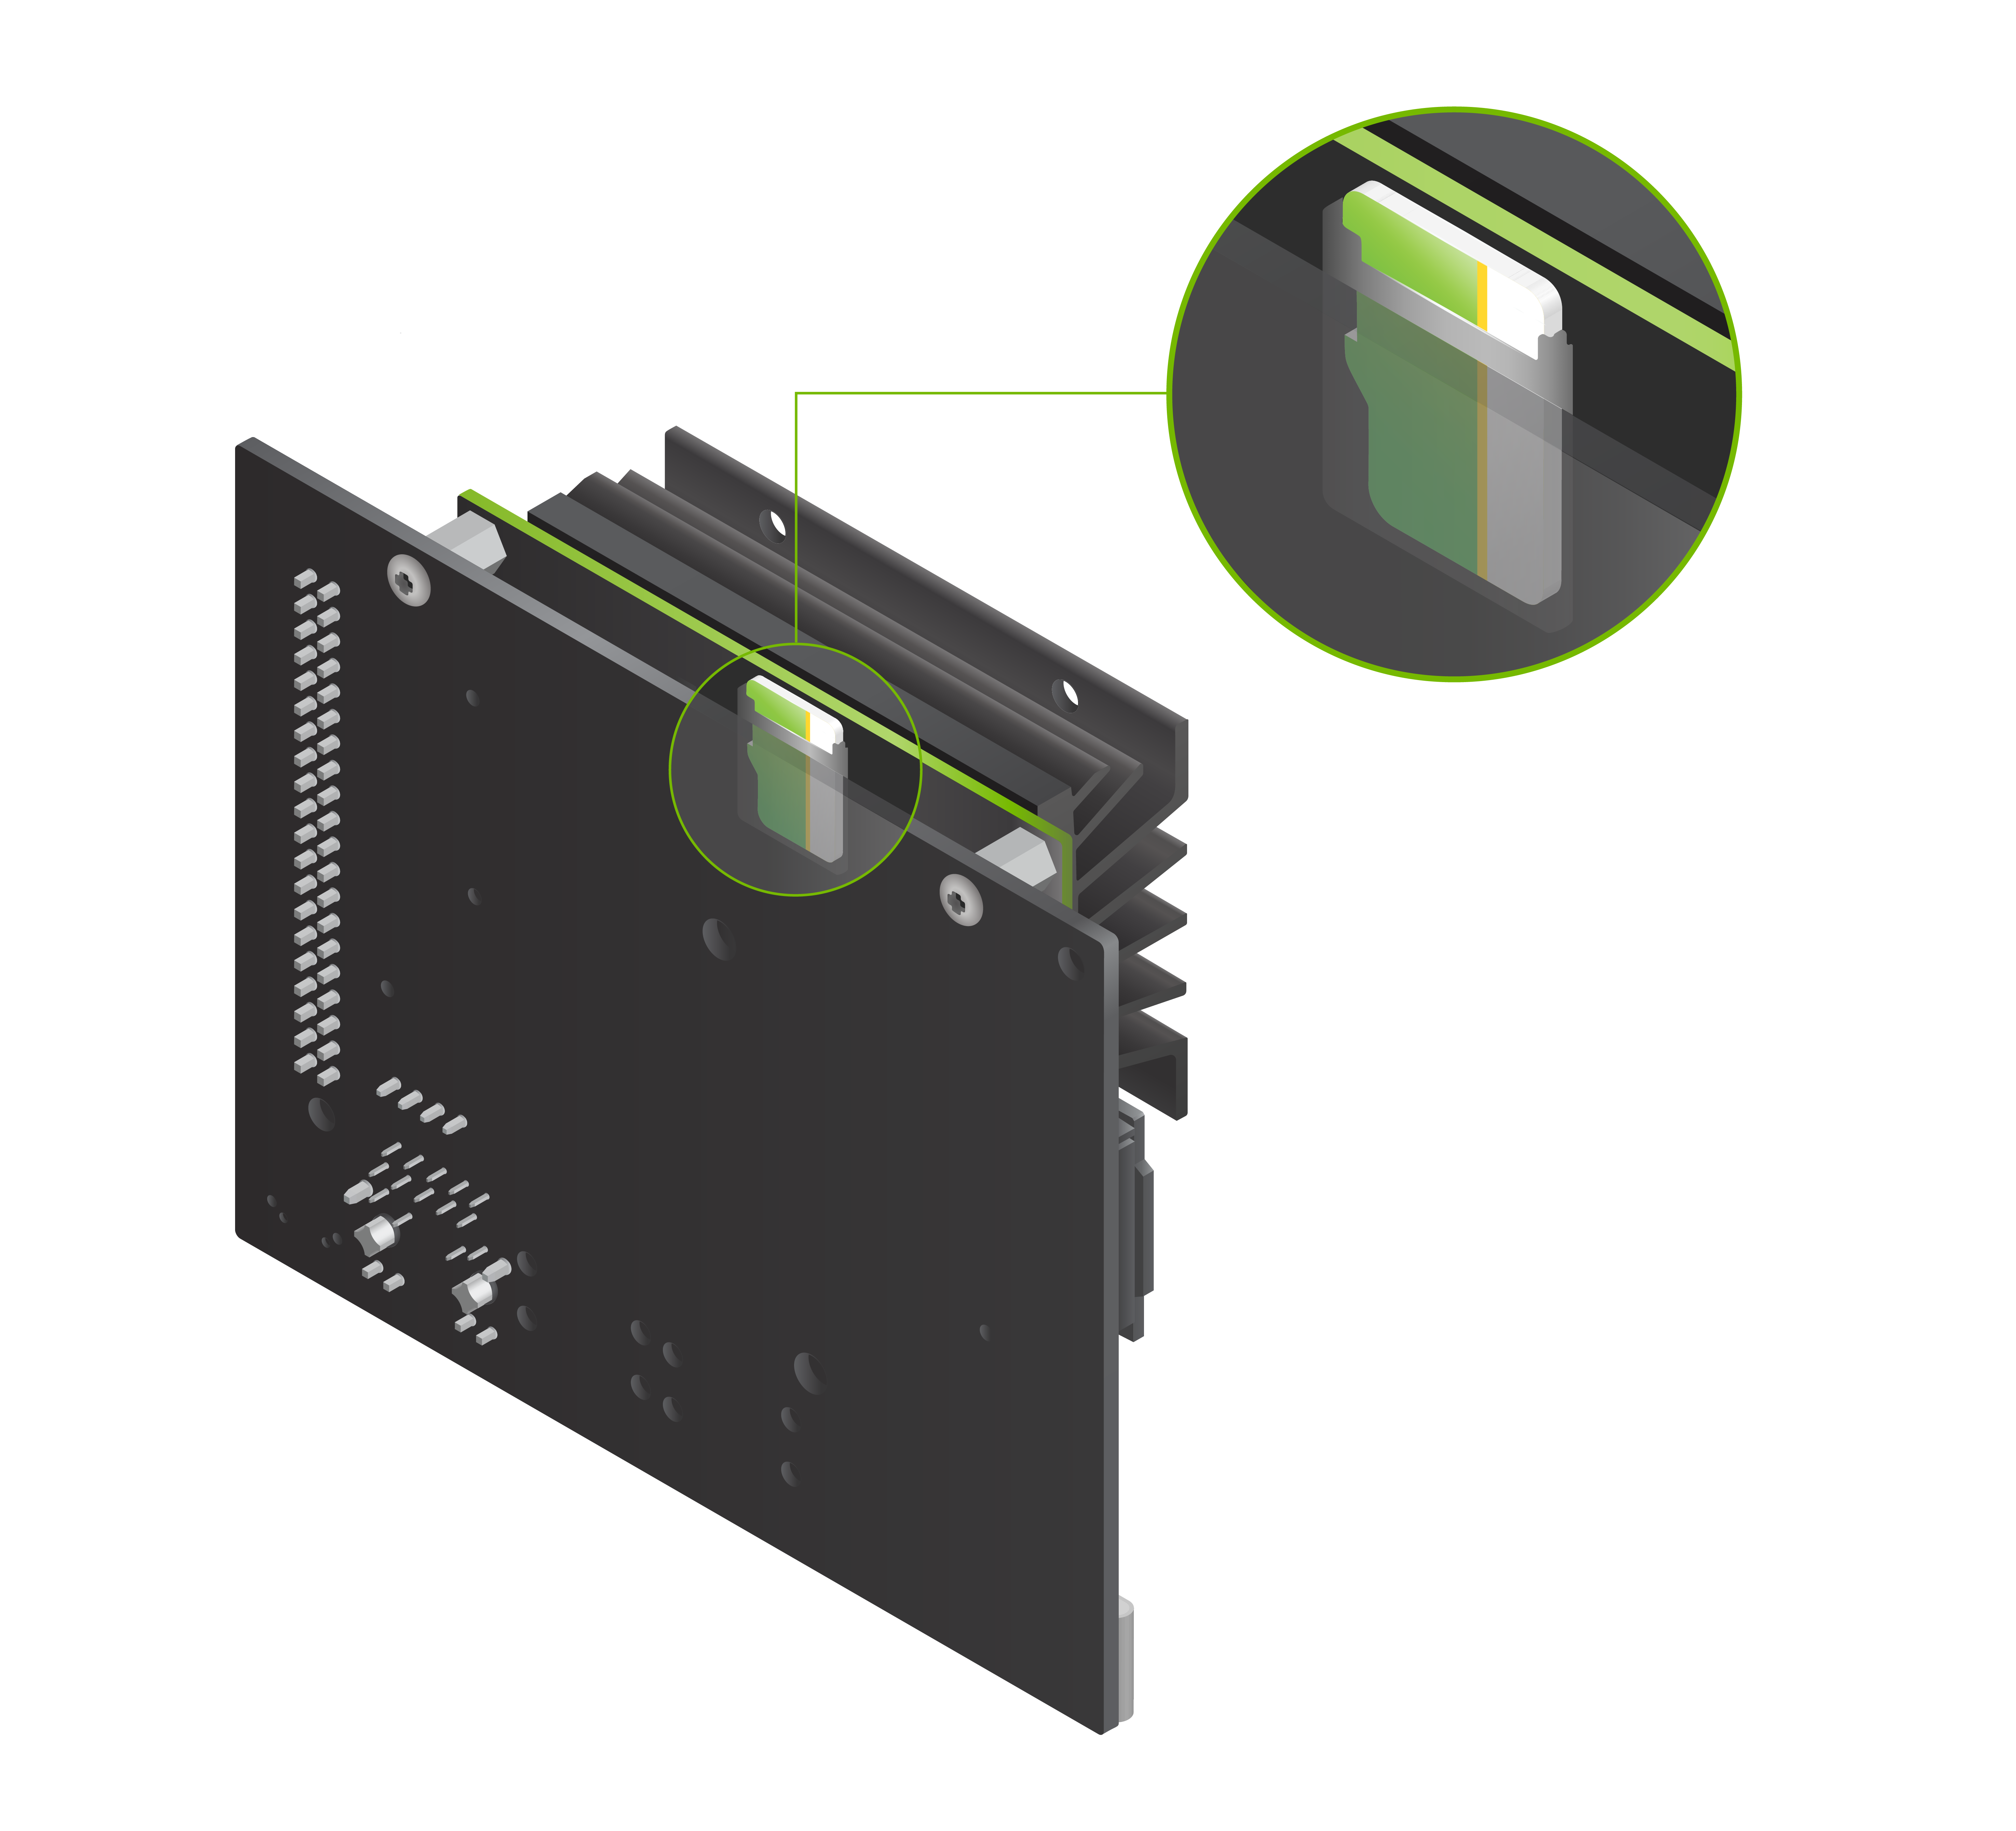 Insert microSD card into slot on underside of Jetson Nano module